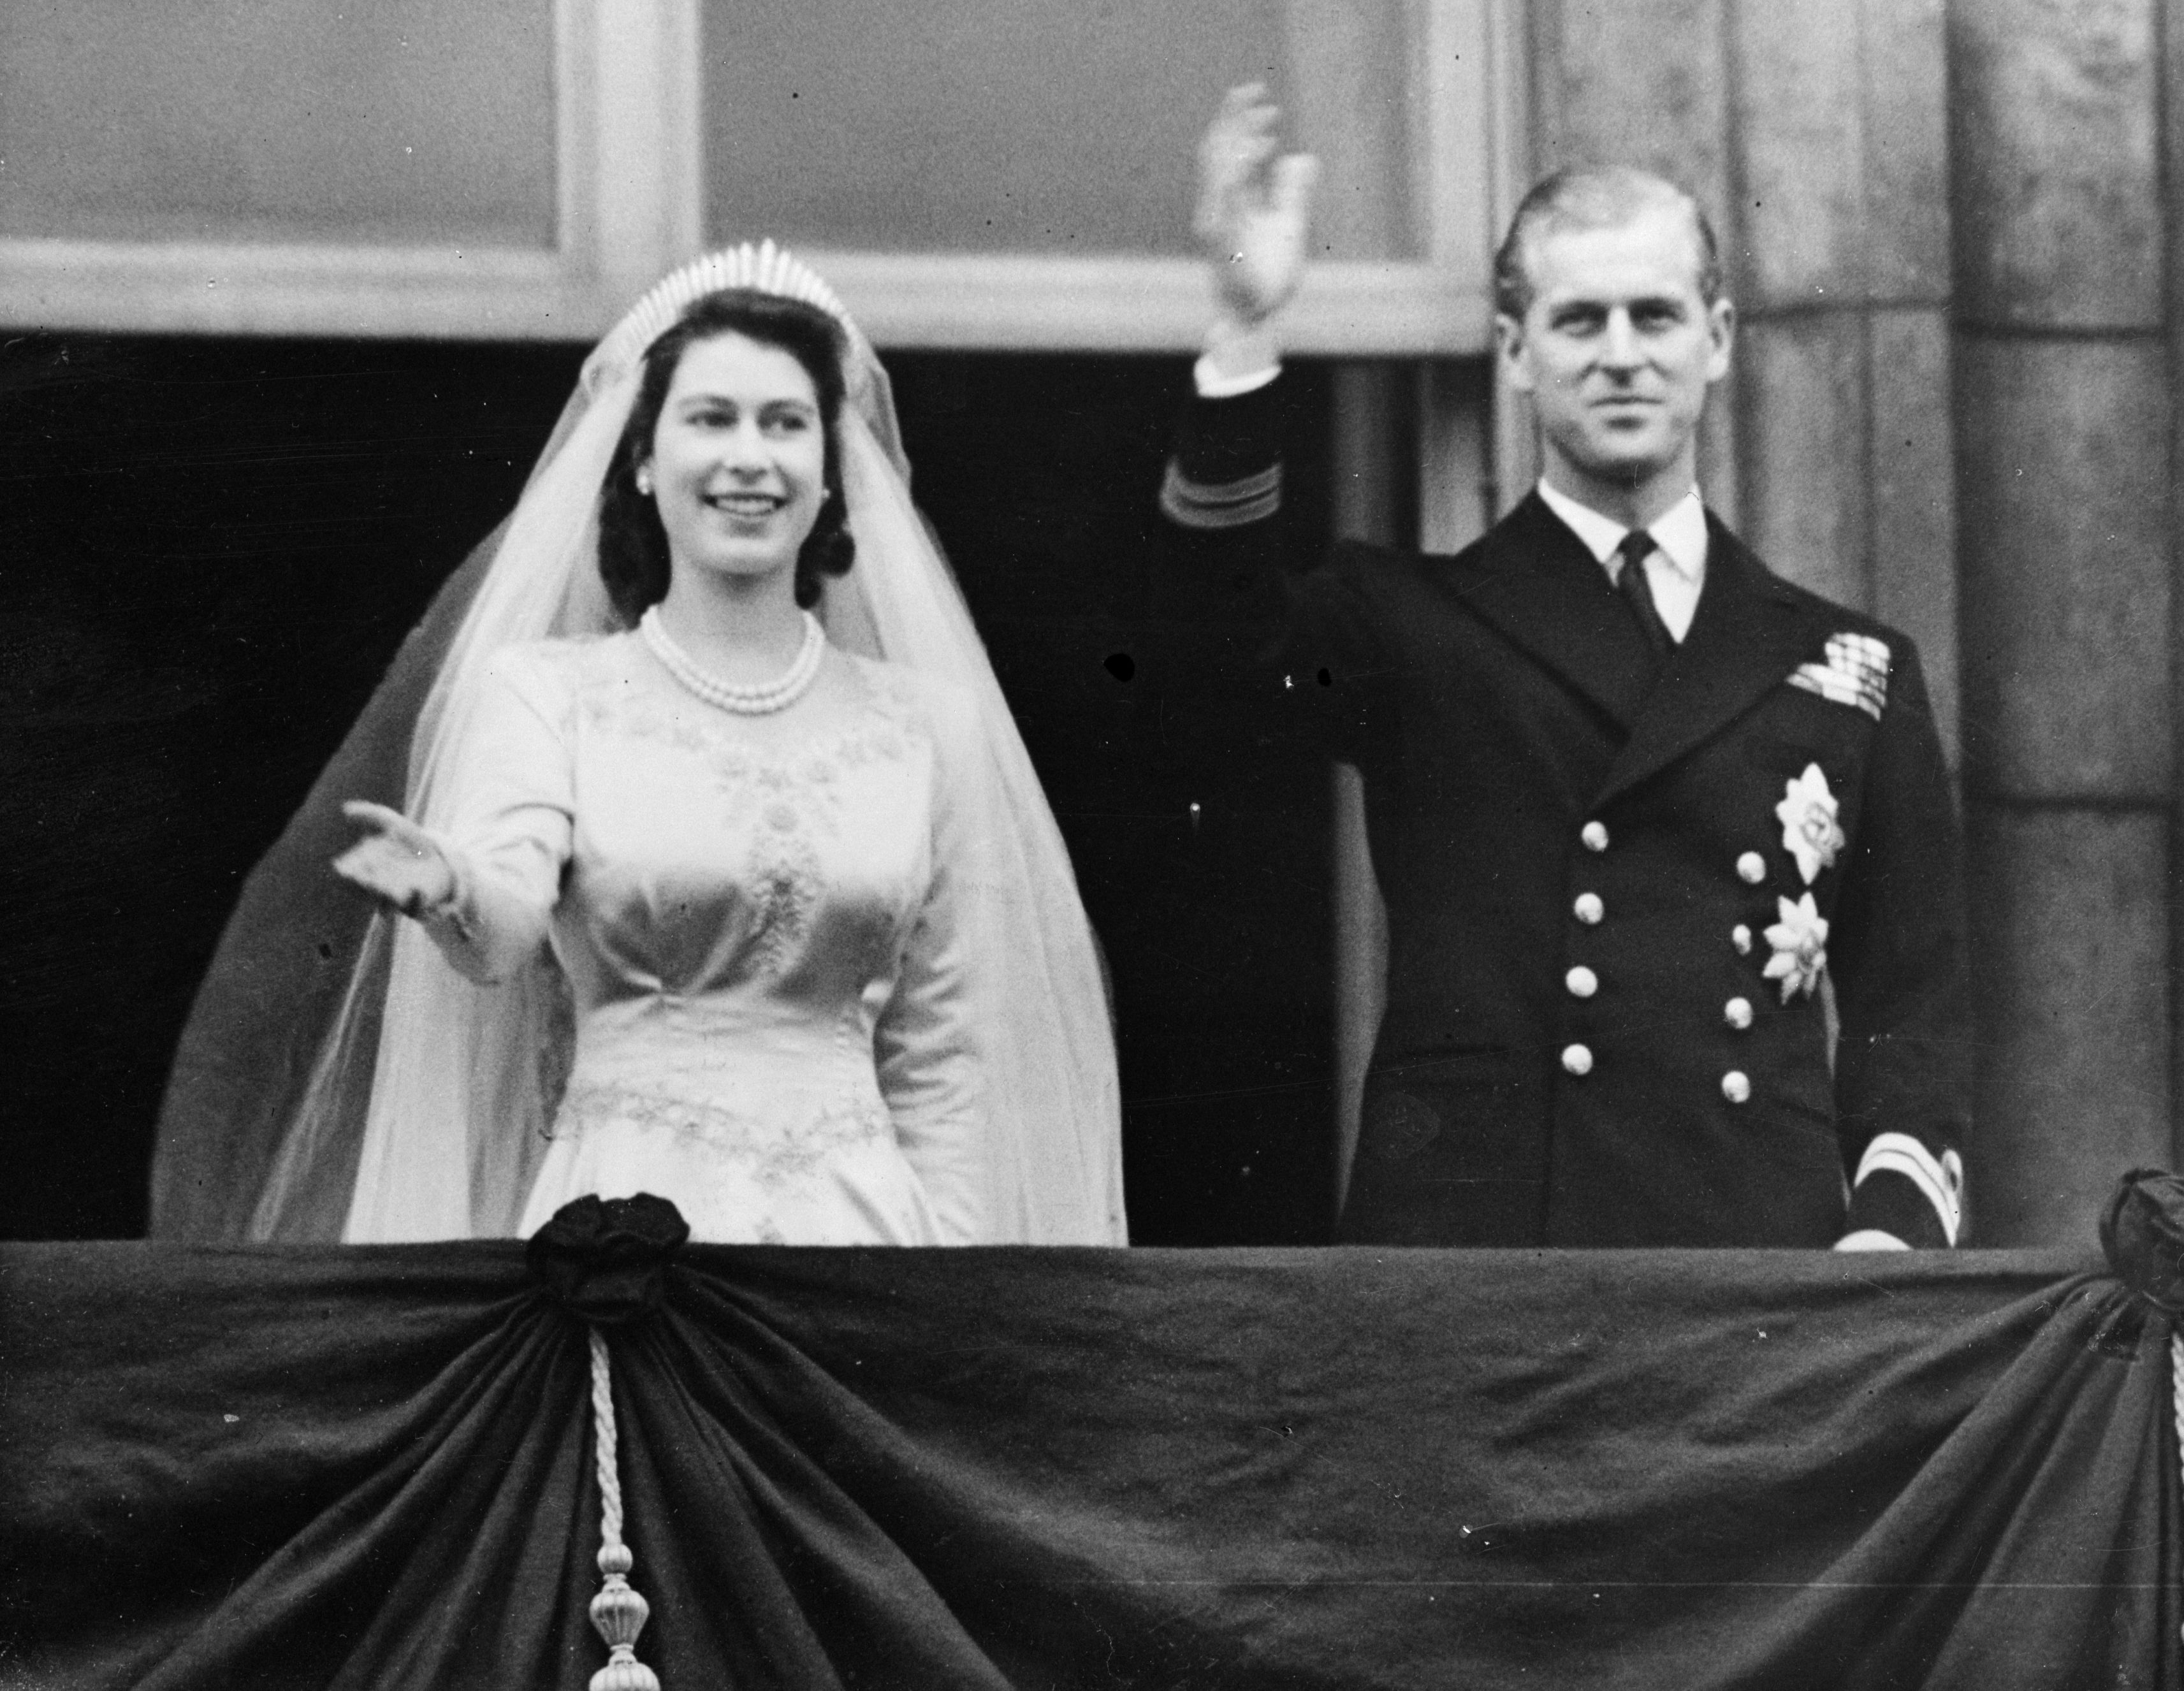 Prince Philip, Duke of Edinburgh, Dies at 99